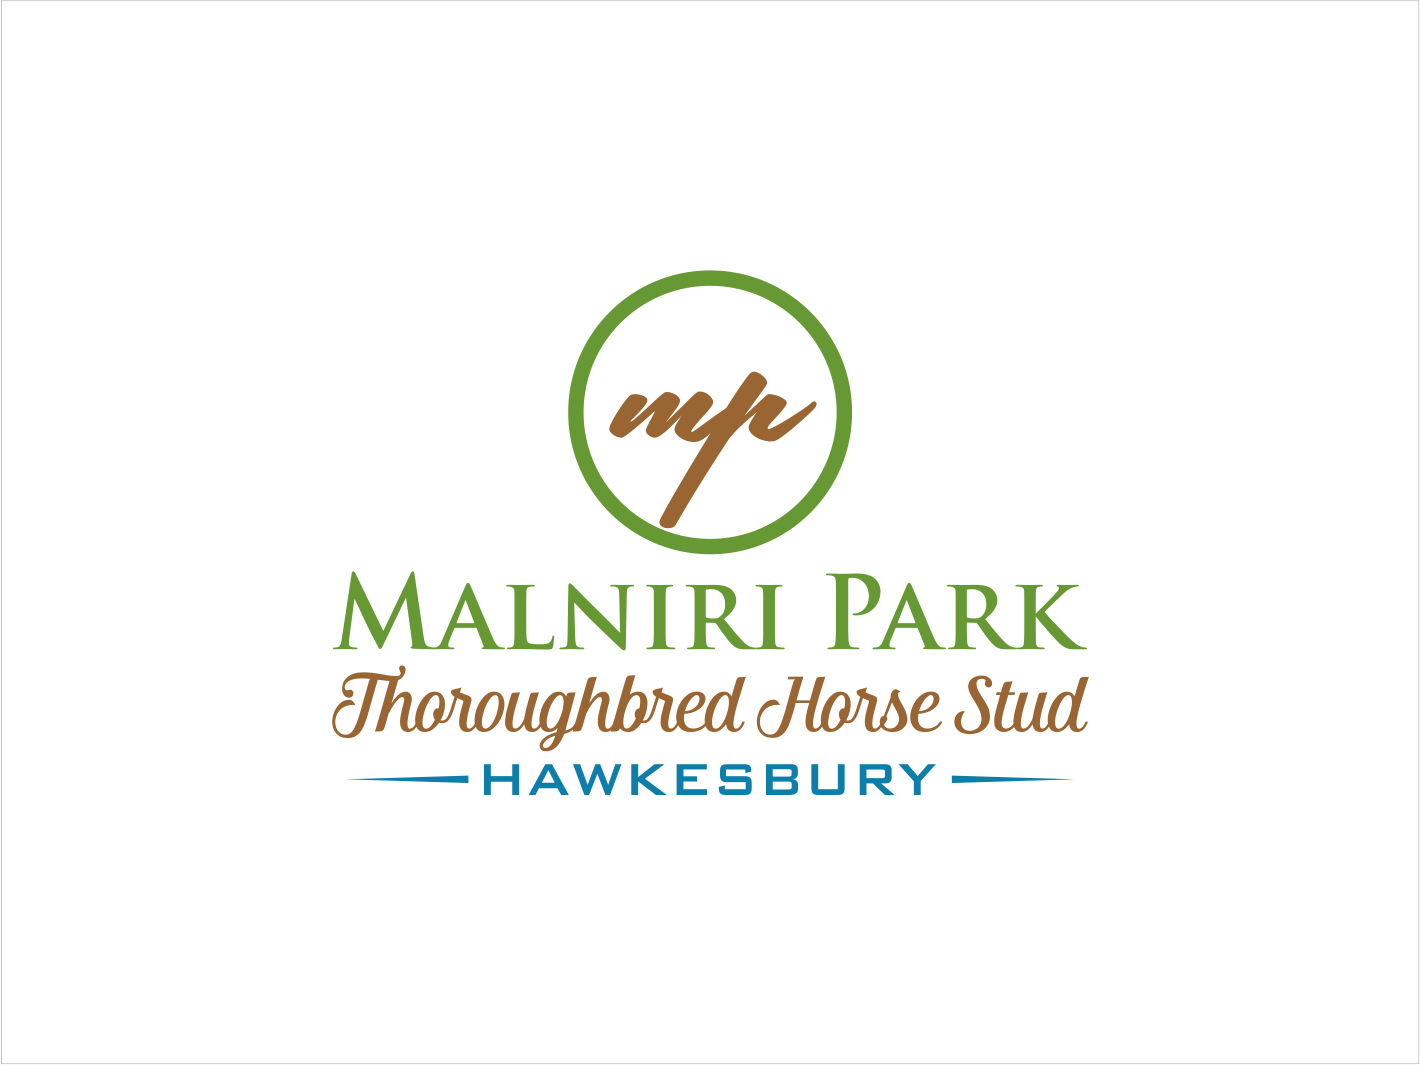 Thoroughbred Logo - Logo Design for Malniri Park - Thoroughbred Horse Stud...Hawkesbury ...